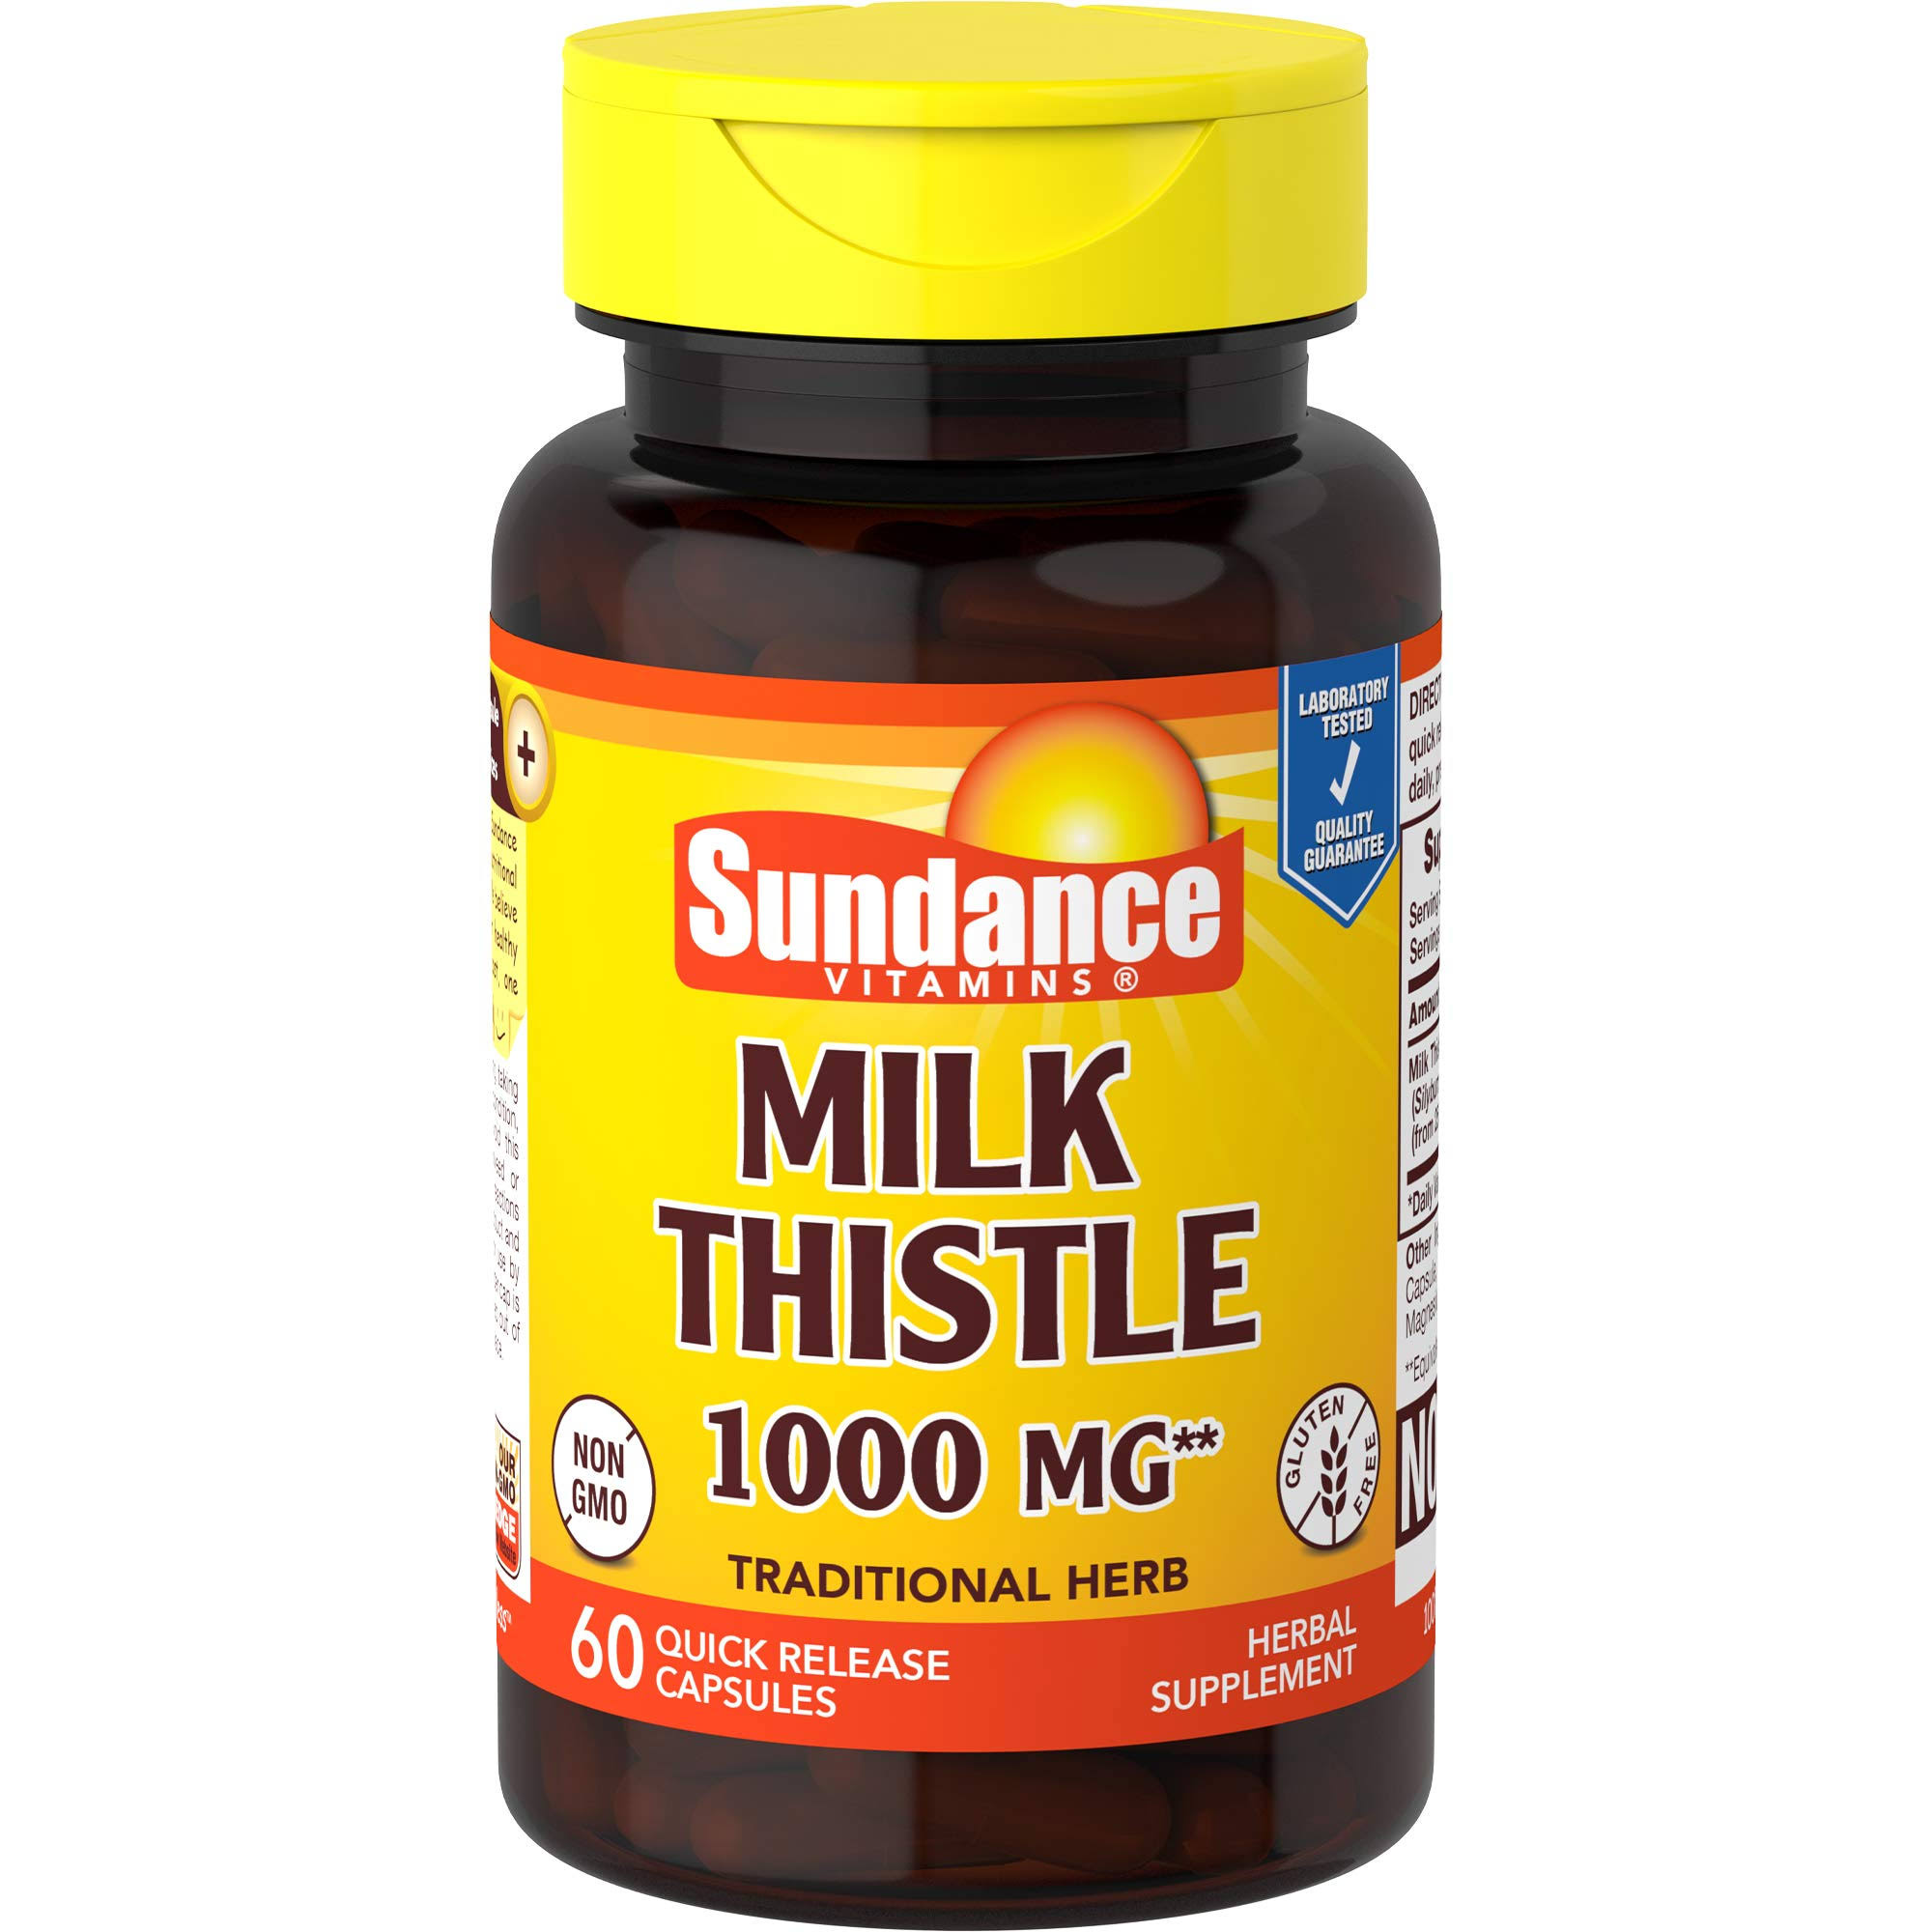 Sundance Vitamins Milk Thistle 1000 MG Traditional Herb Supplement - 60ct